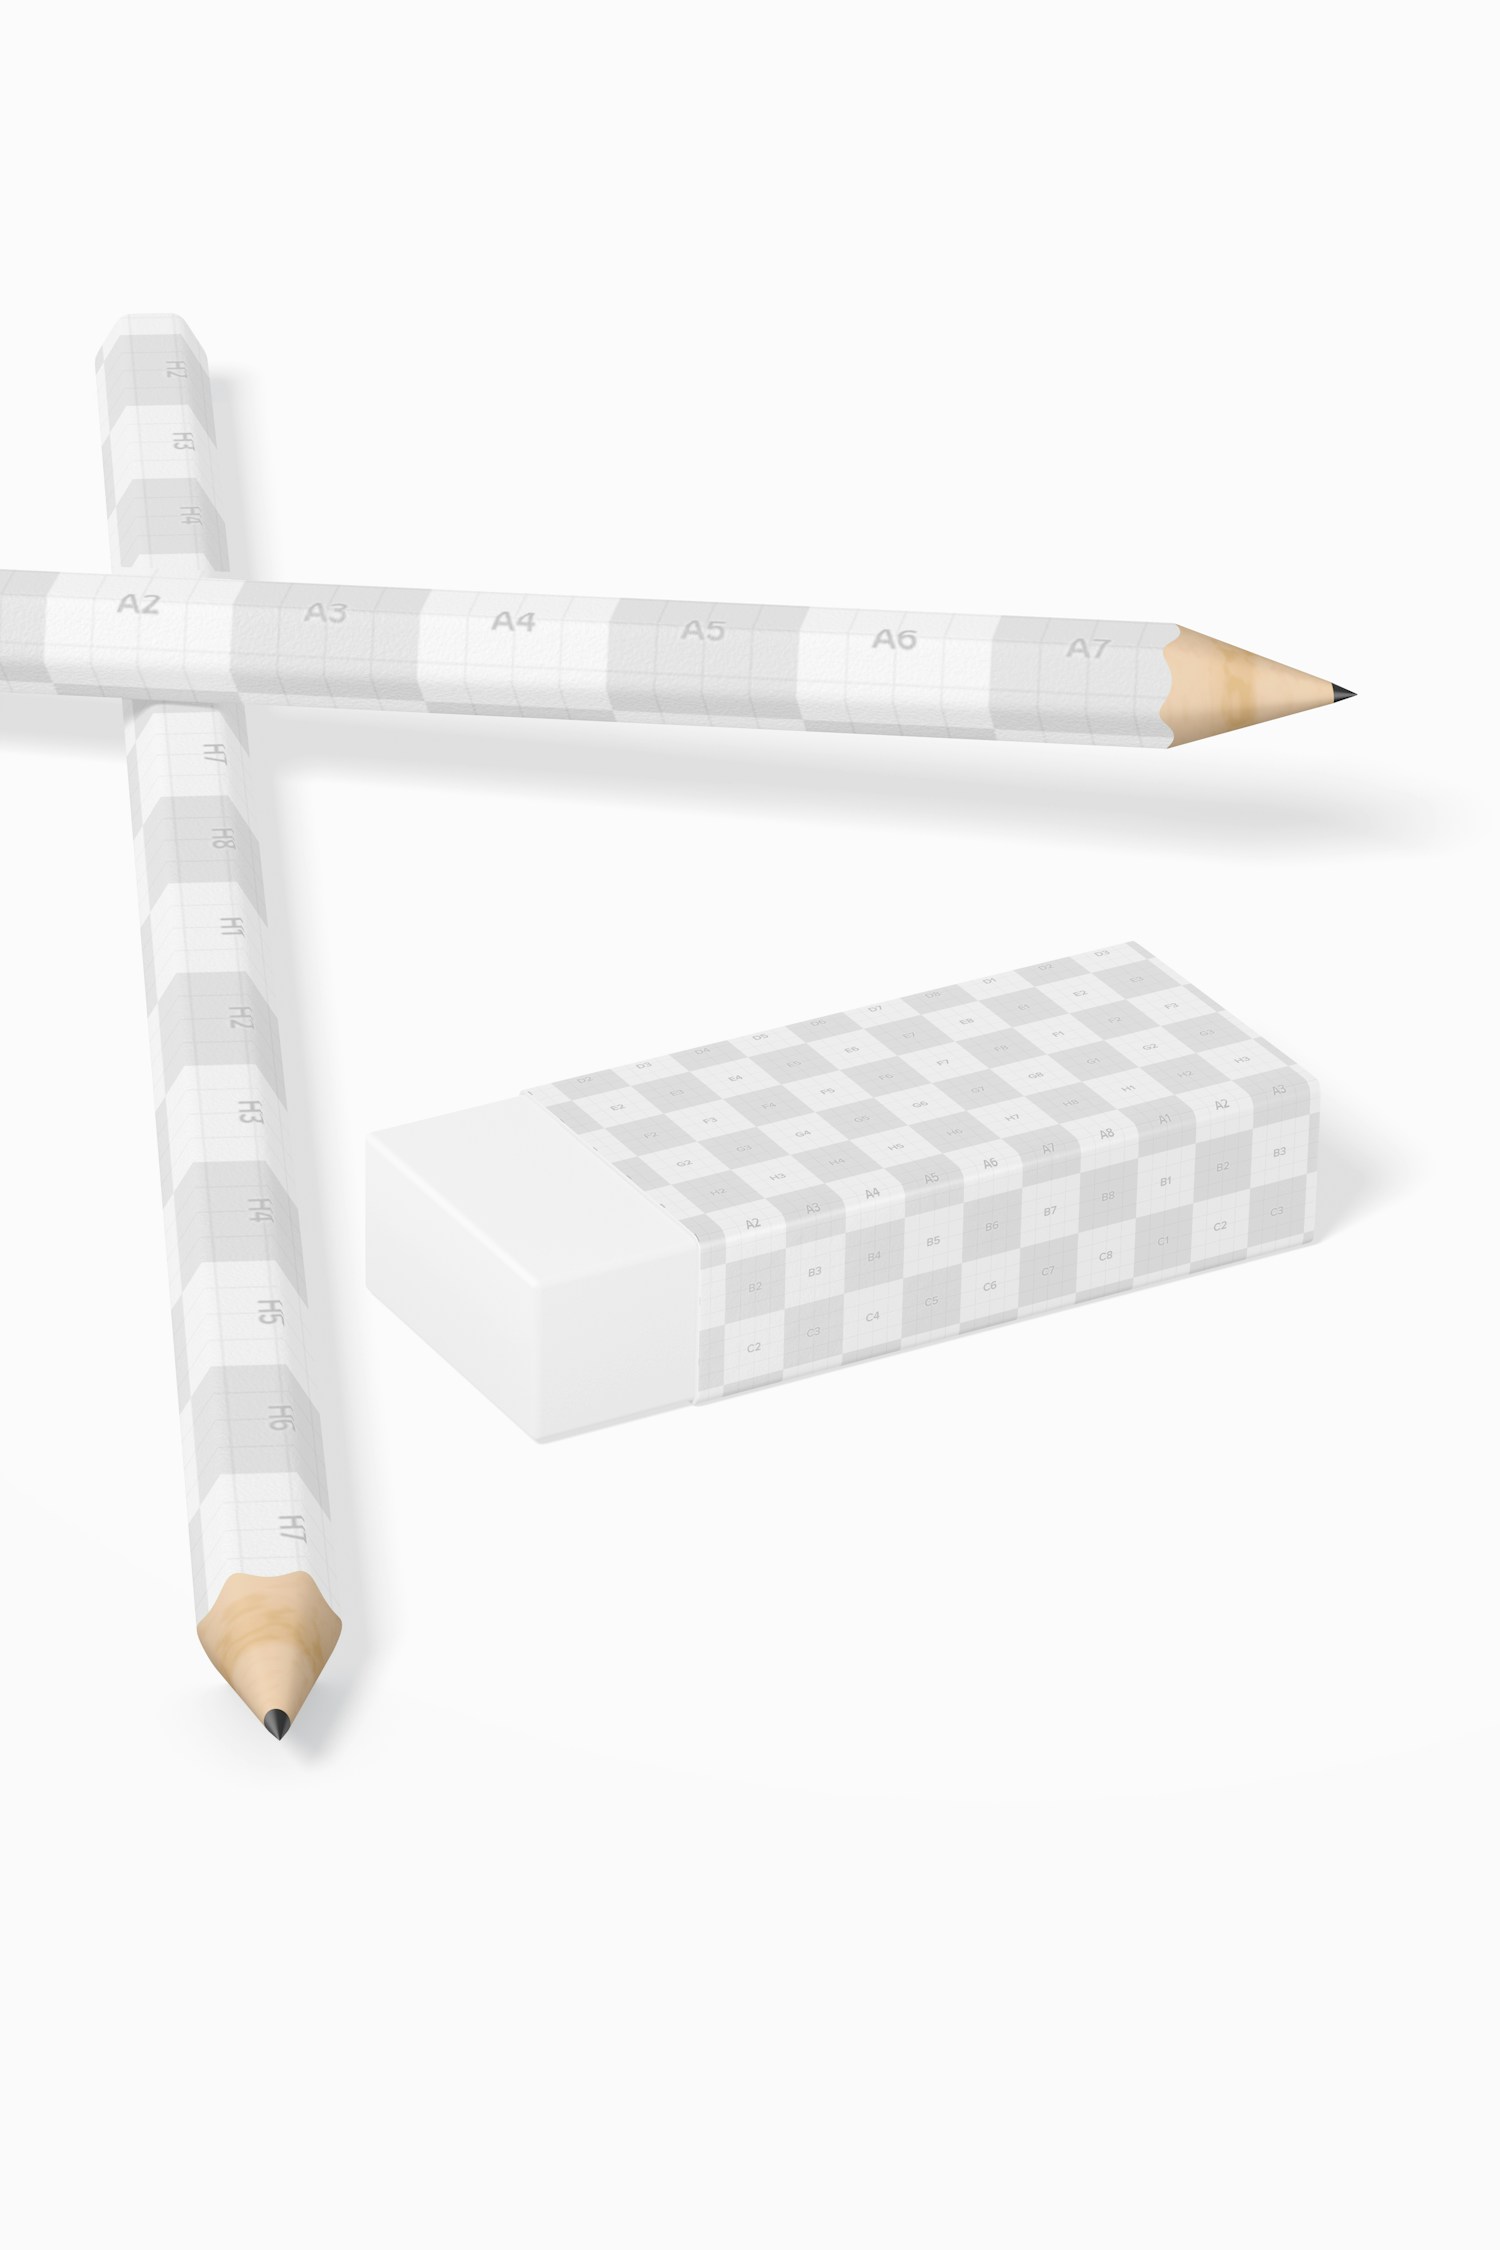 Eraser with Pencils Mockup